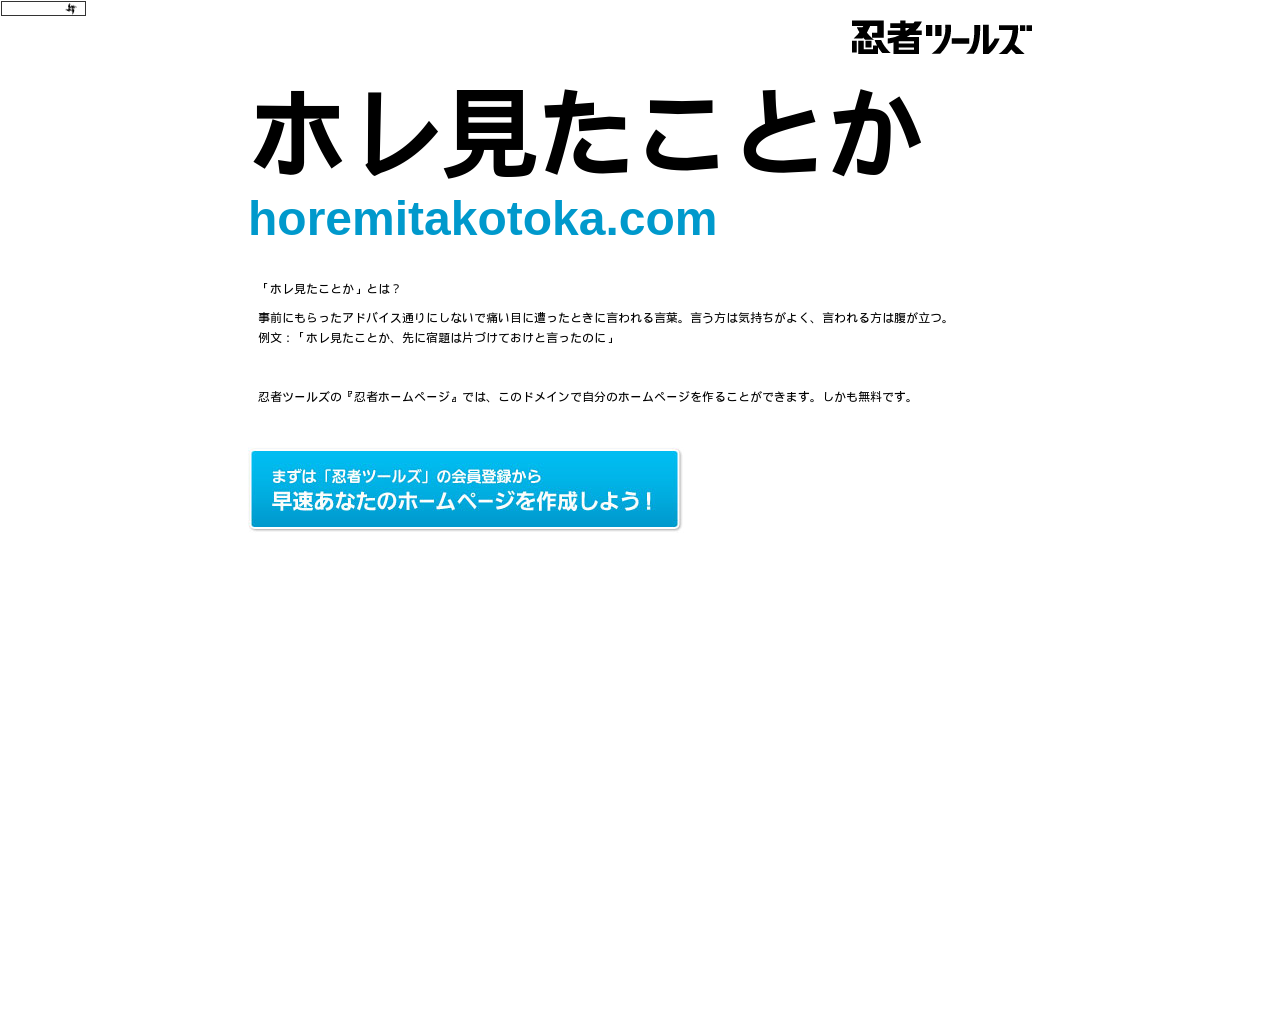 horemitakotoka.com